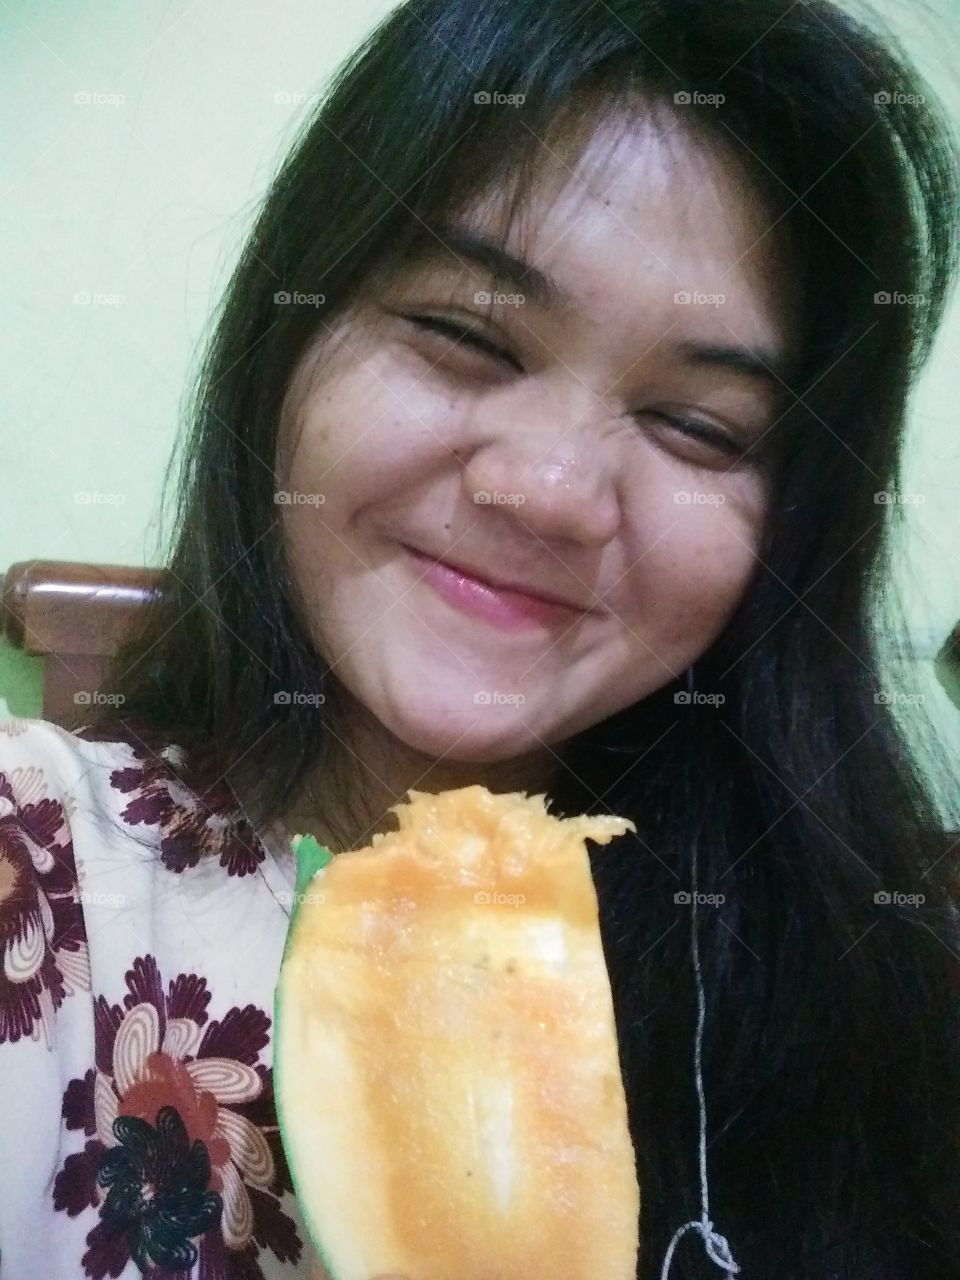 happinesss to eat manggo? wanna eat?😆😘😘